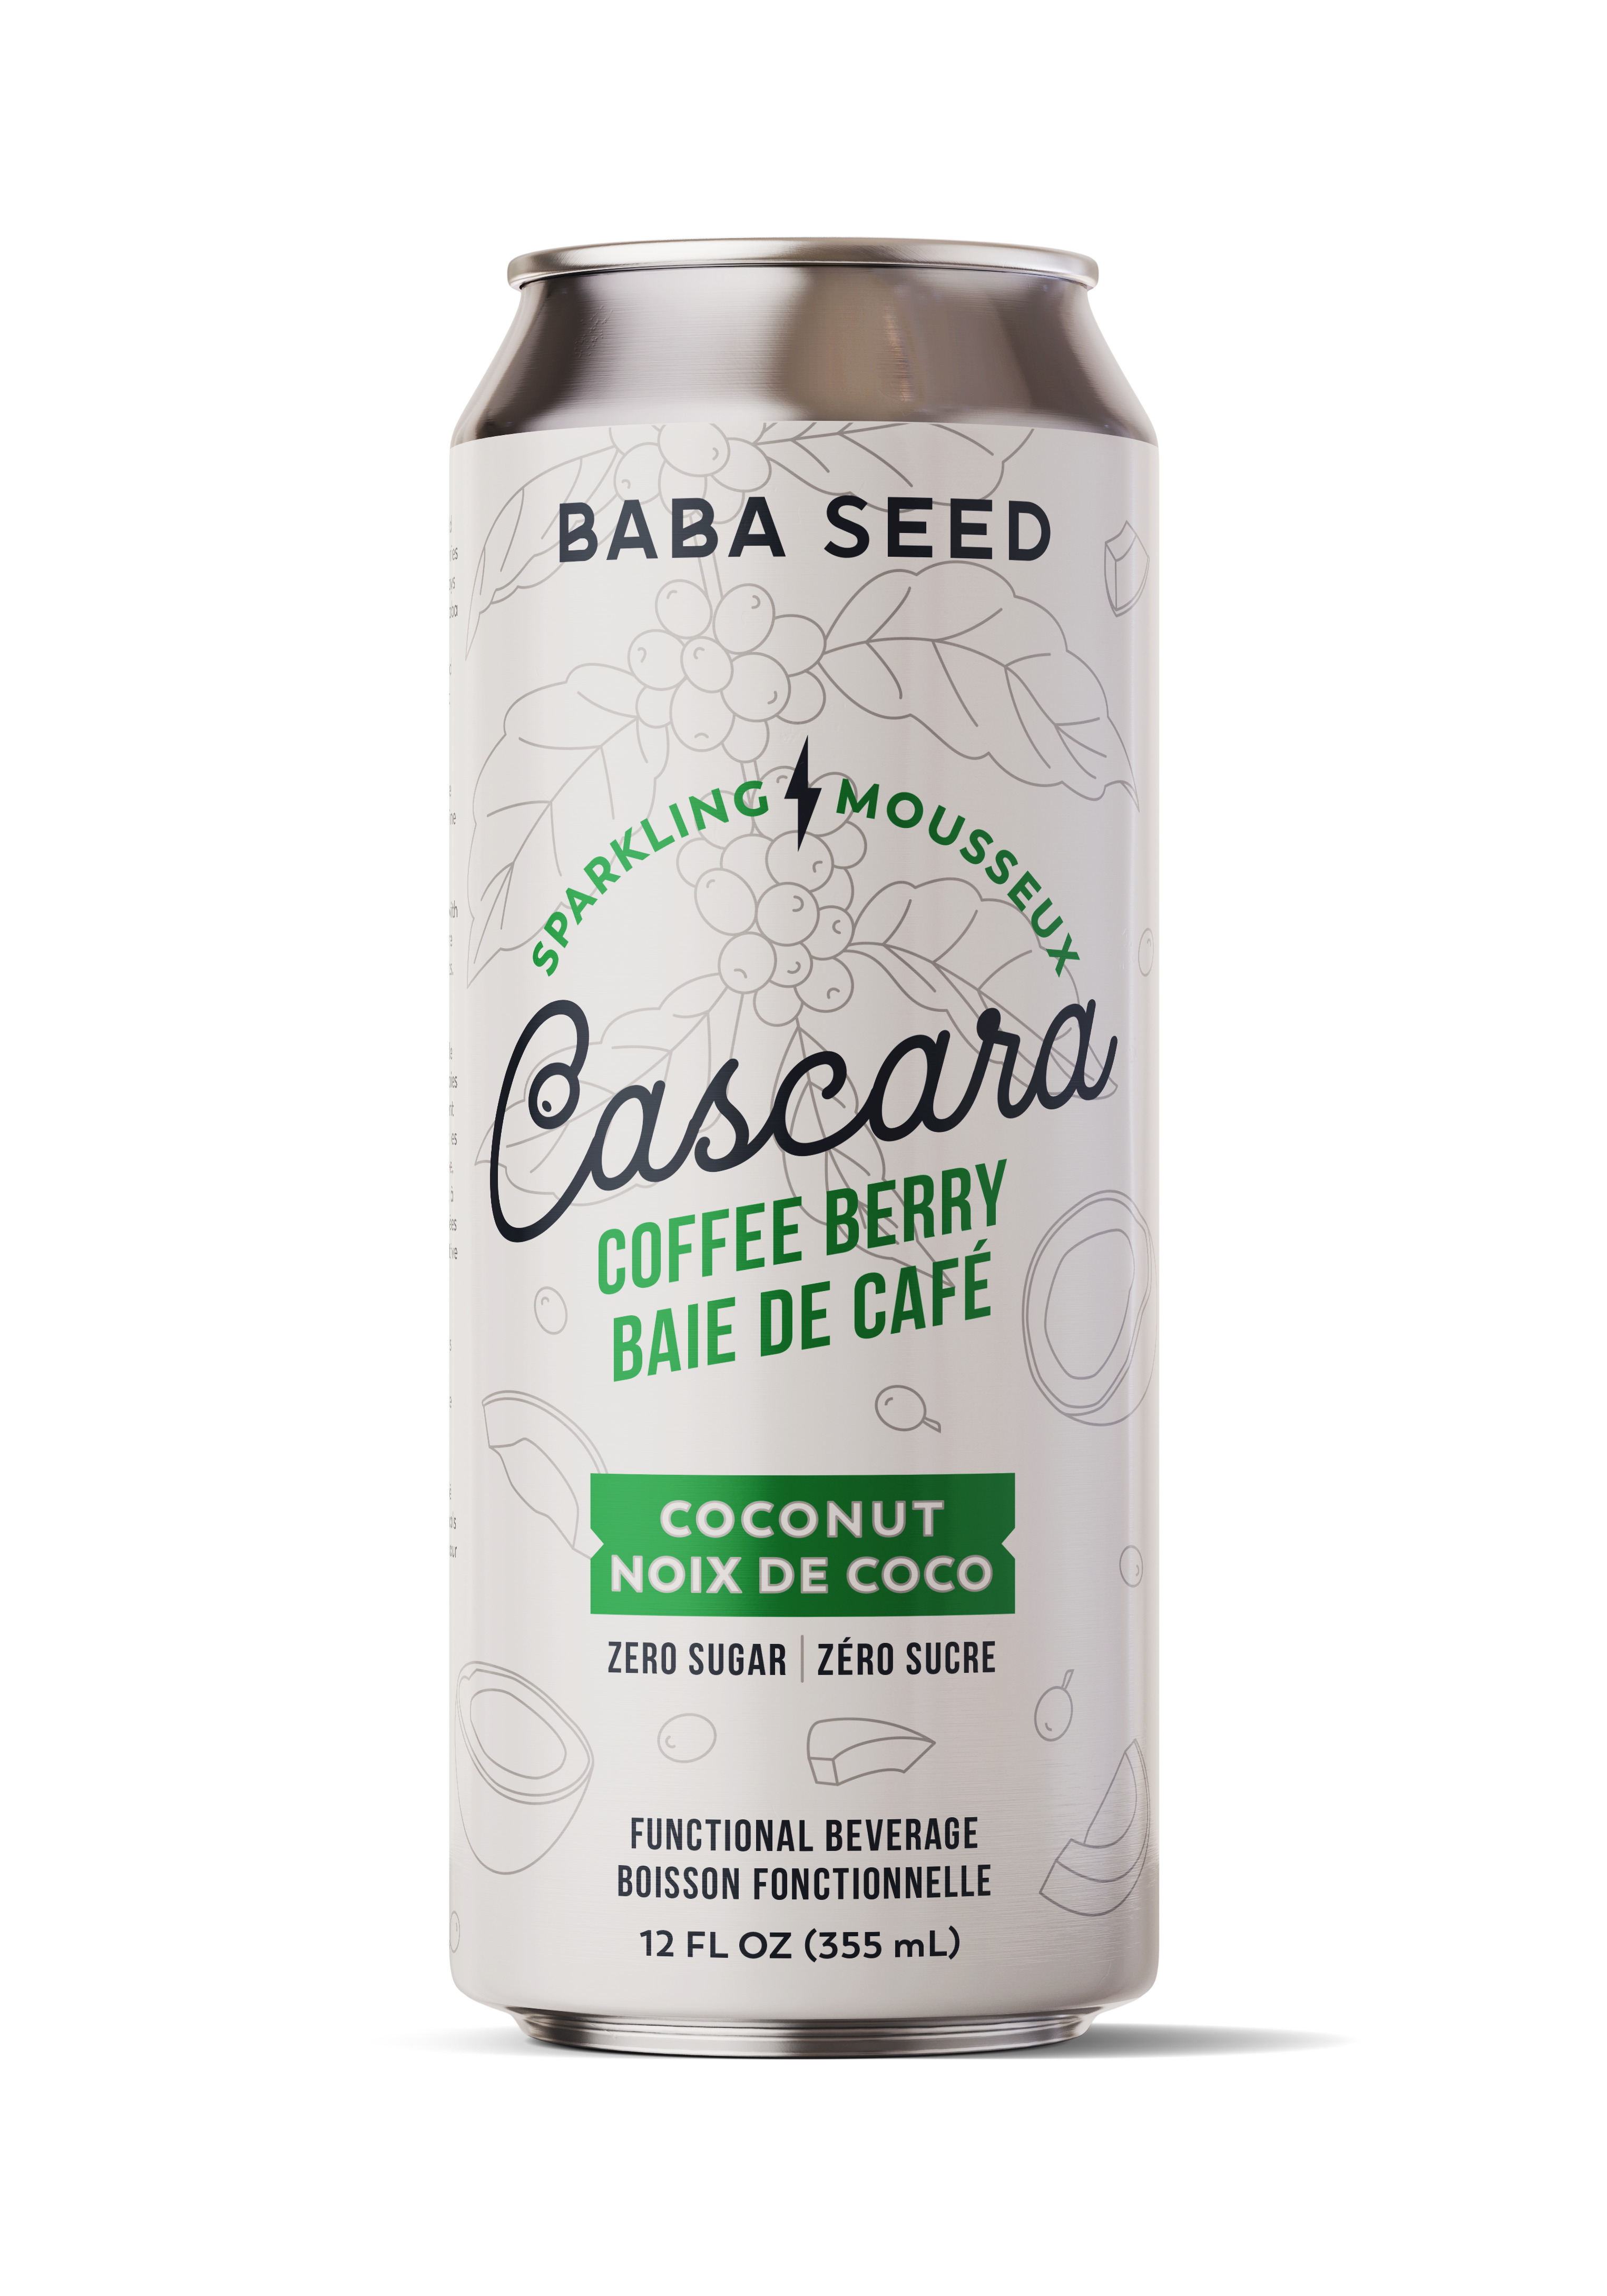 Cascara Coffee Berry - Coconut